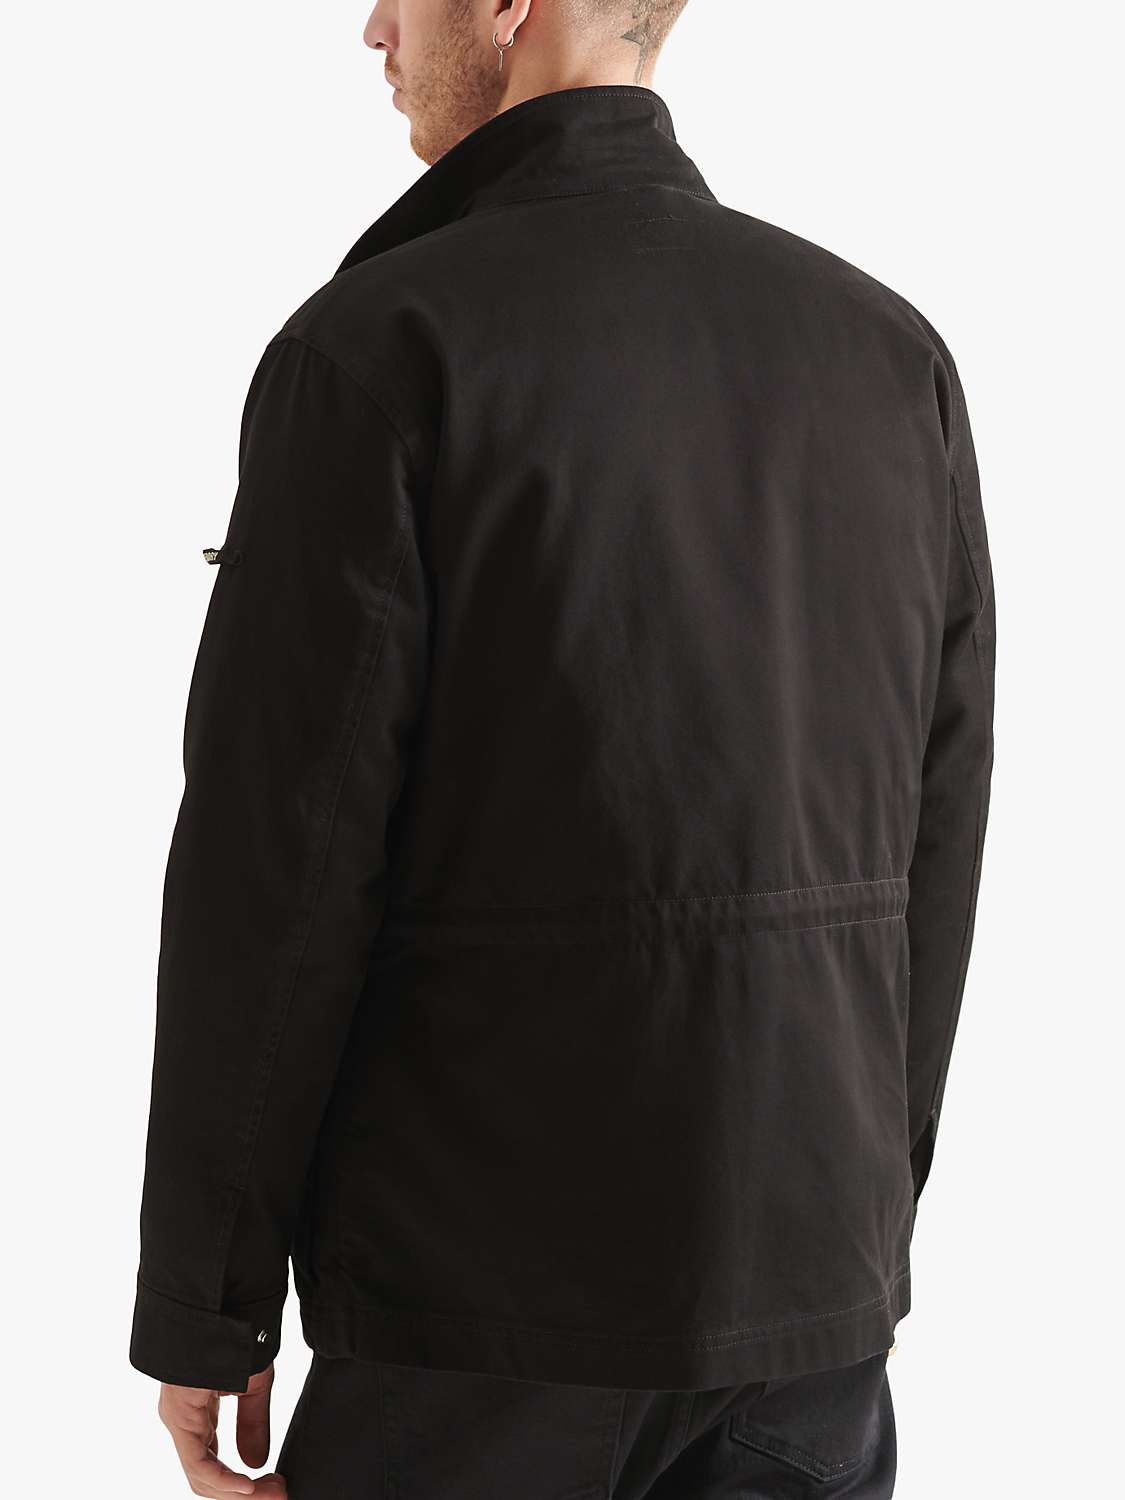 Superdry 3-In-1 Utility Jacket, Black at John Lewis & Partners